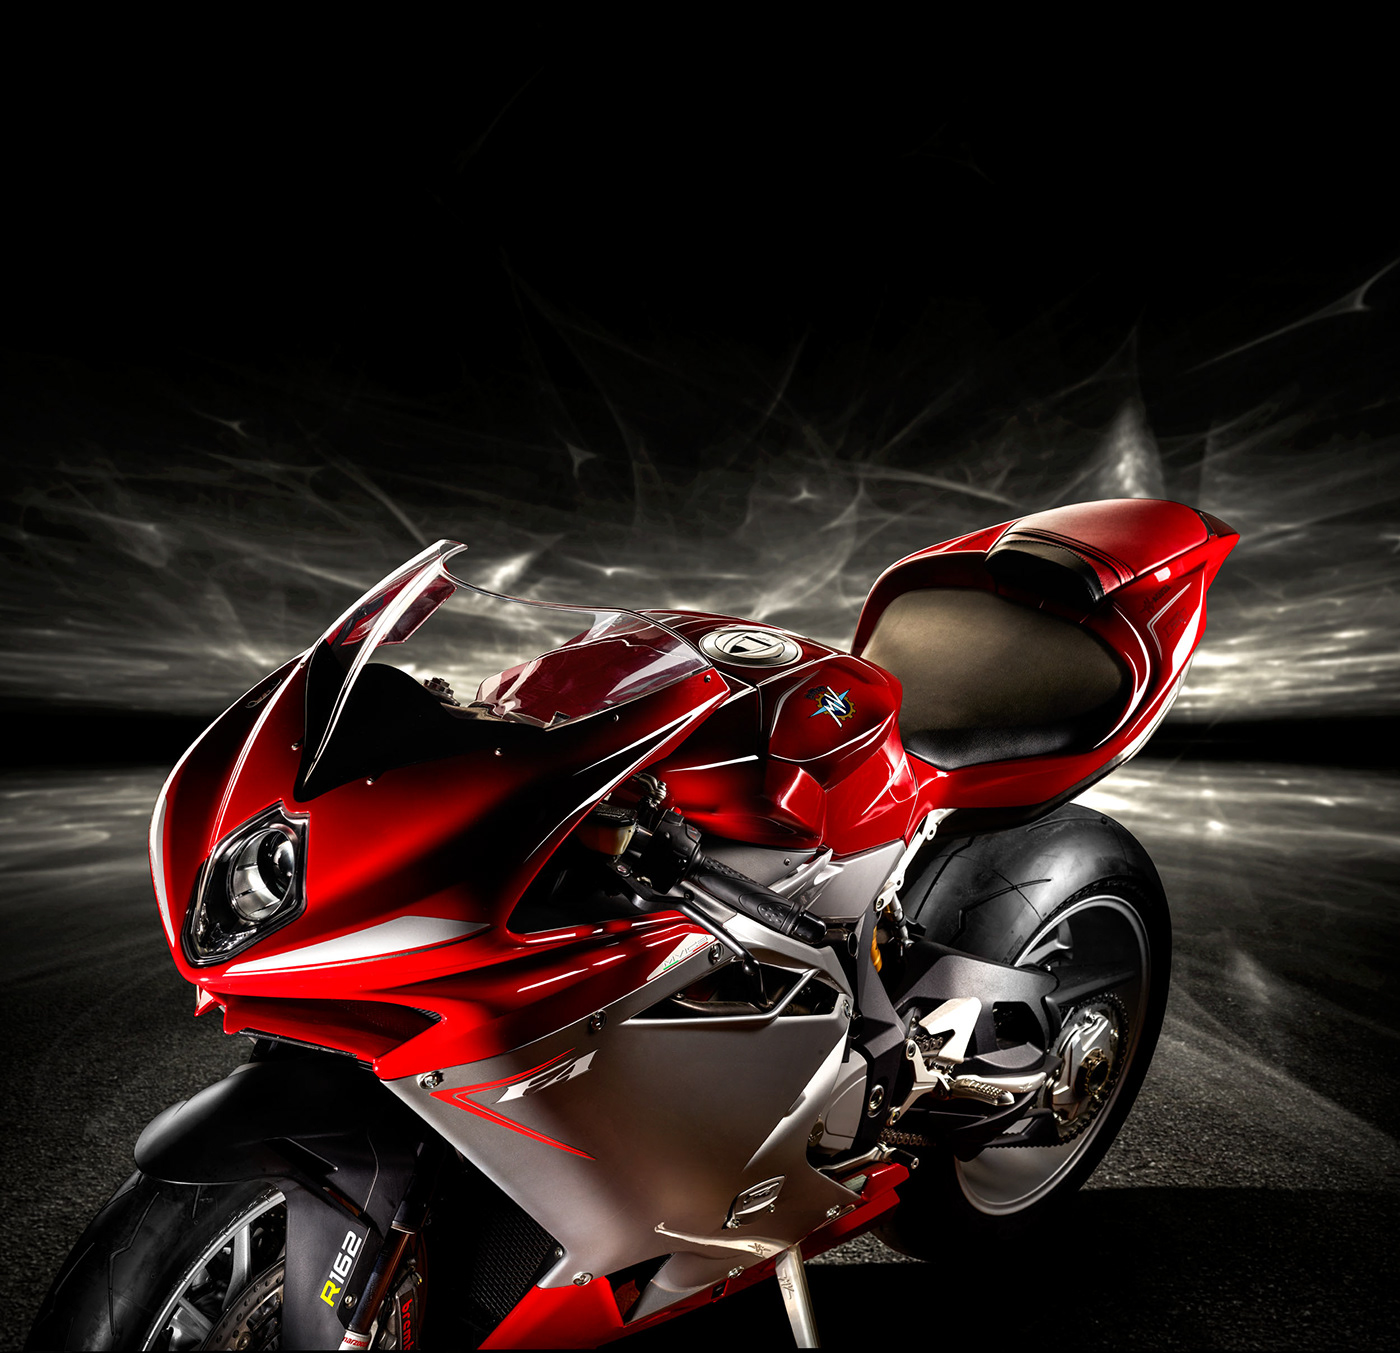 Art of The Art of Motorcycle - MV Agusta on Behance